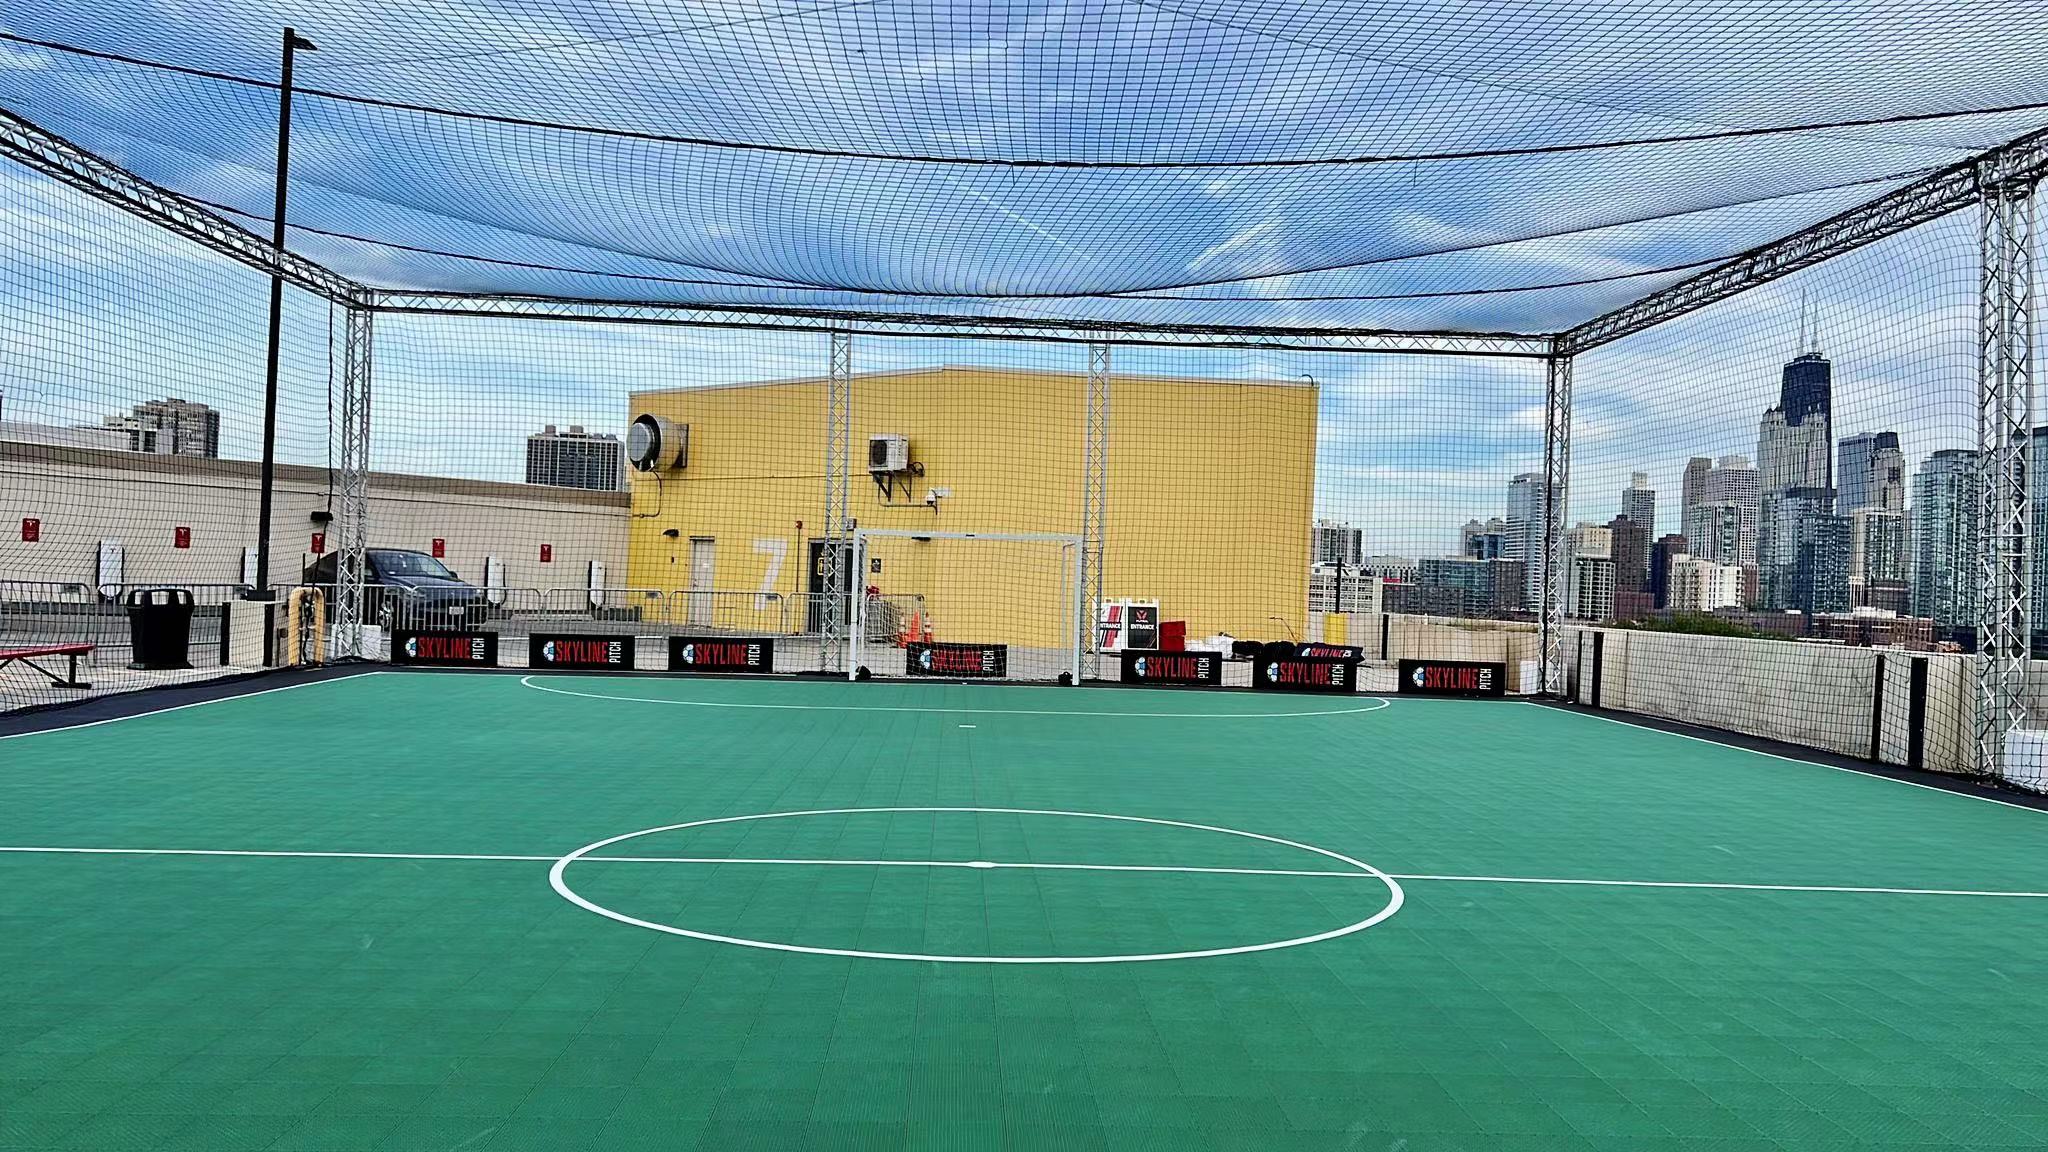 diy green futsal court project by wanhesport